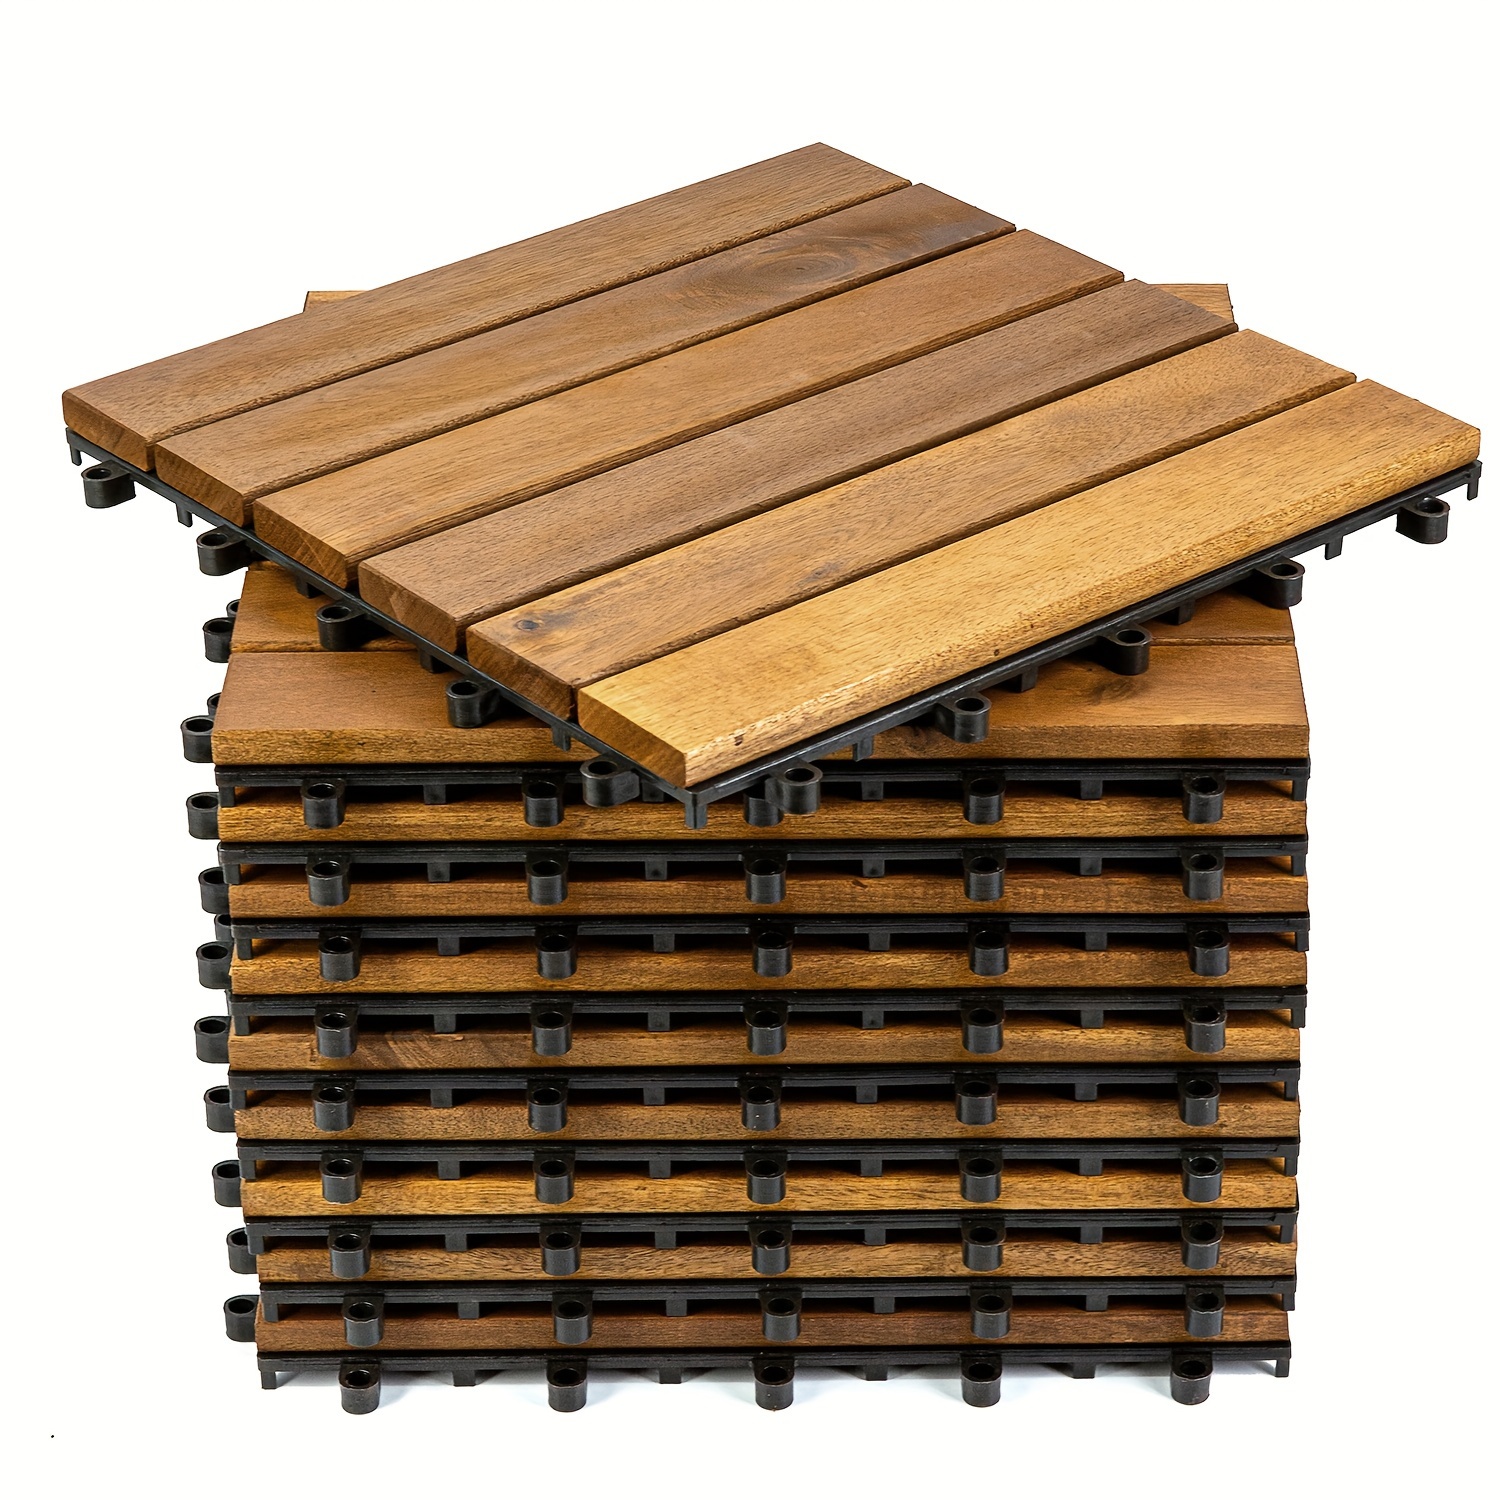 

10pcs/30pcs 12 Inch X 12 Inch Acacia Wood Interlocking Flooring Deck Tile Brown 6 Slats